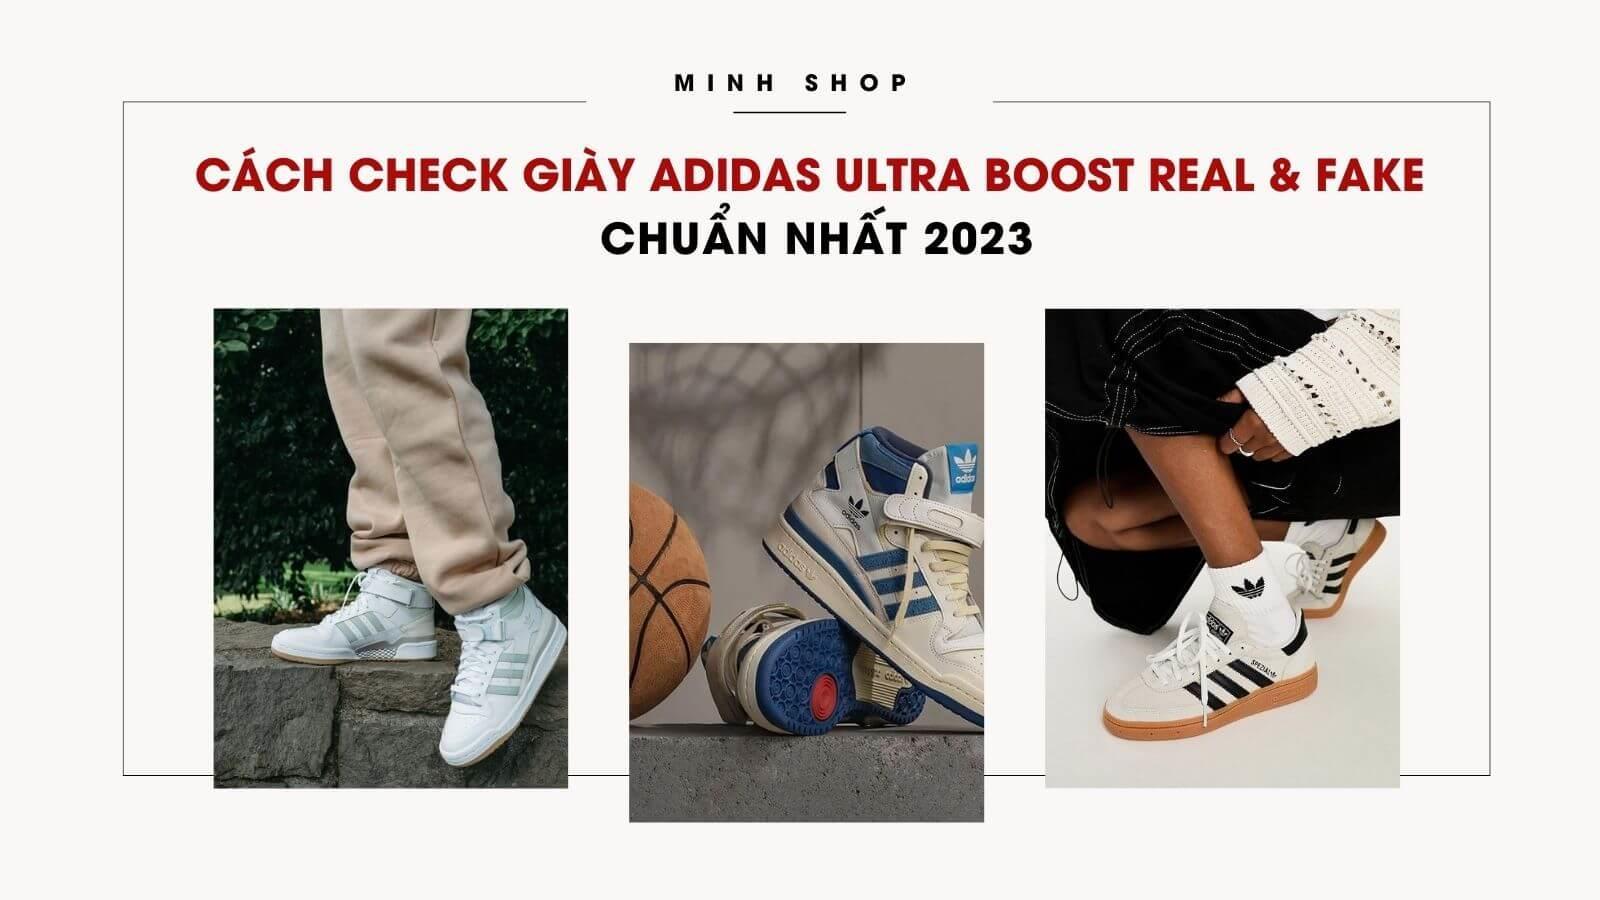 cach-check-giay-adidas-ultra-boost-real-fake-chuan-nhat-2023